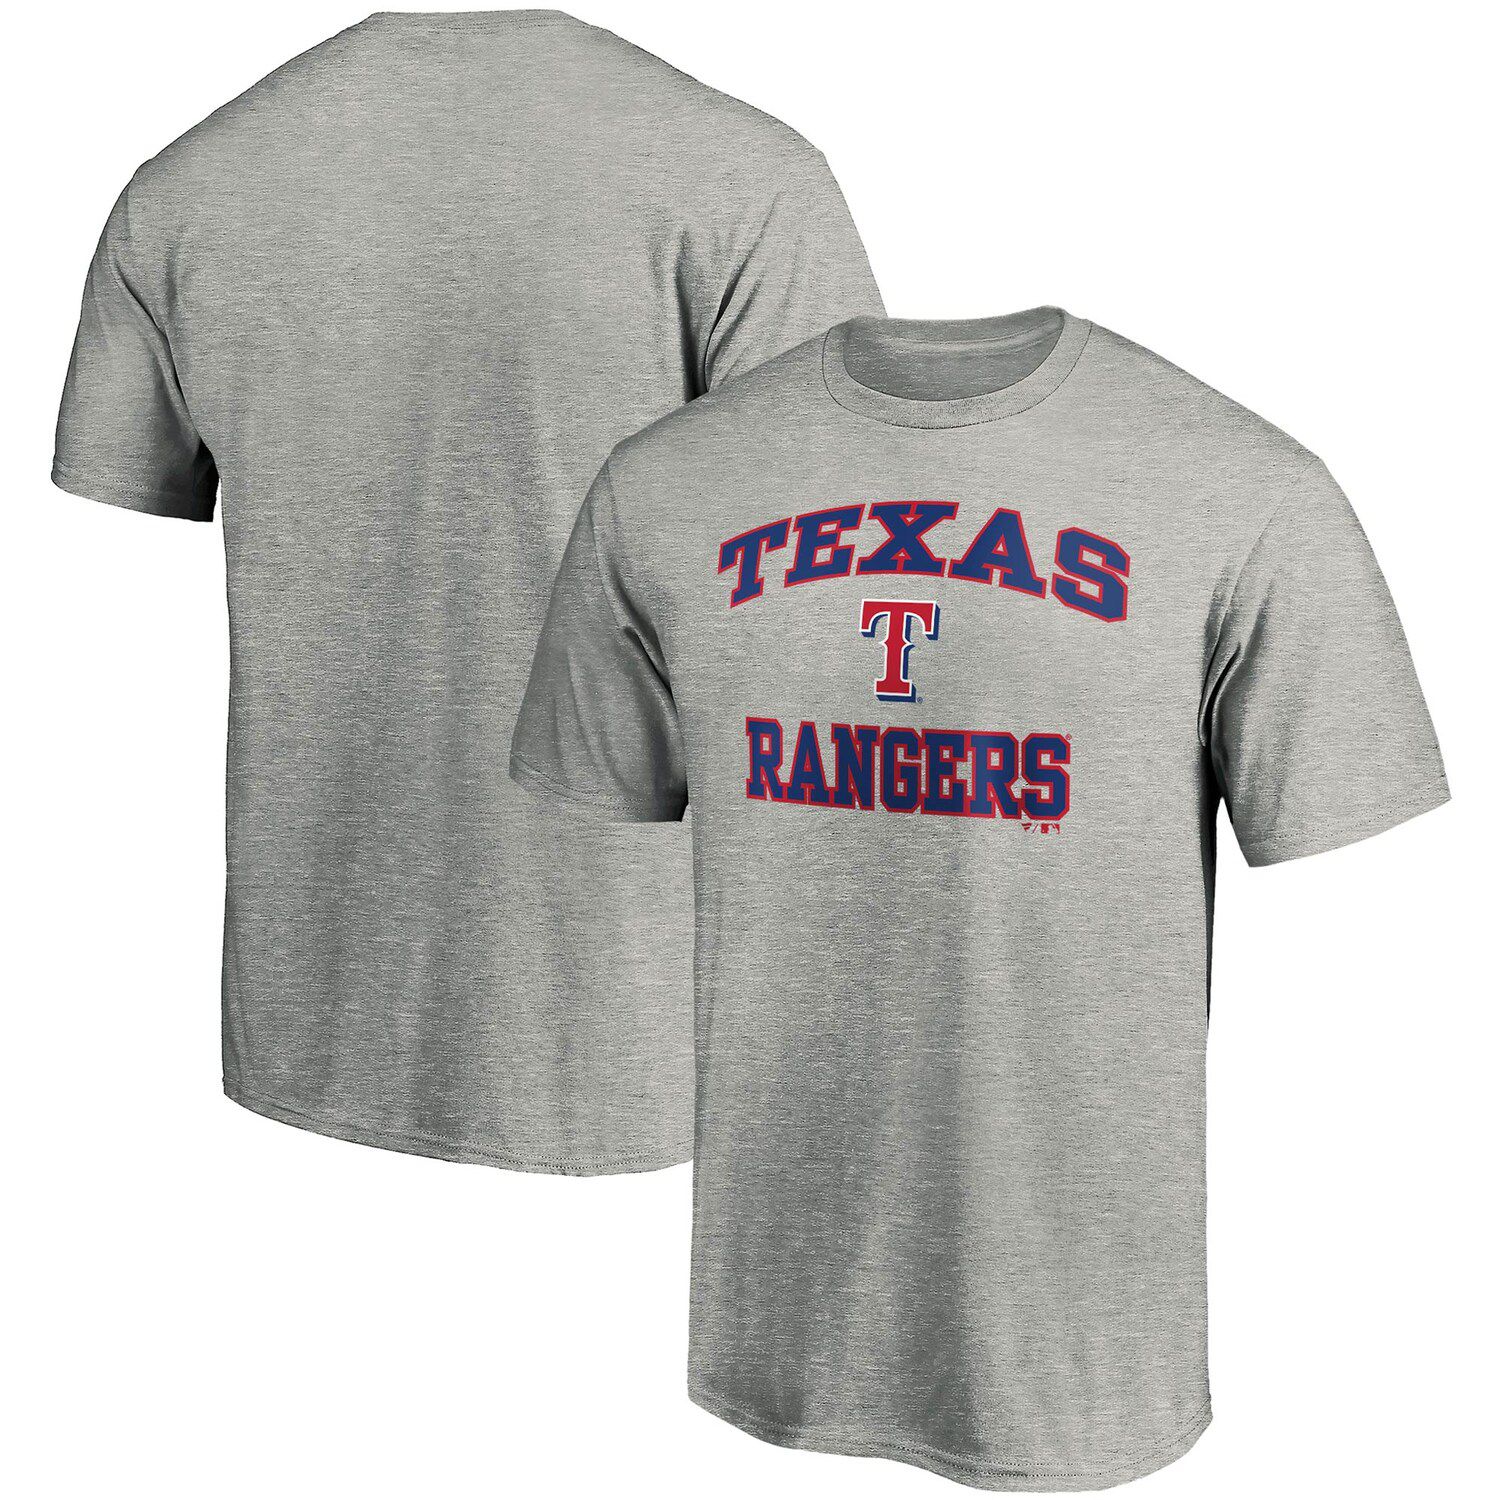 texas rangers gray jersey